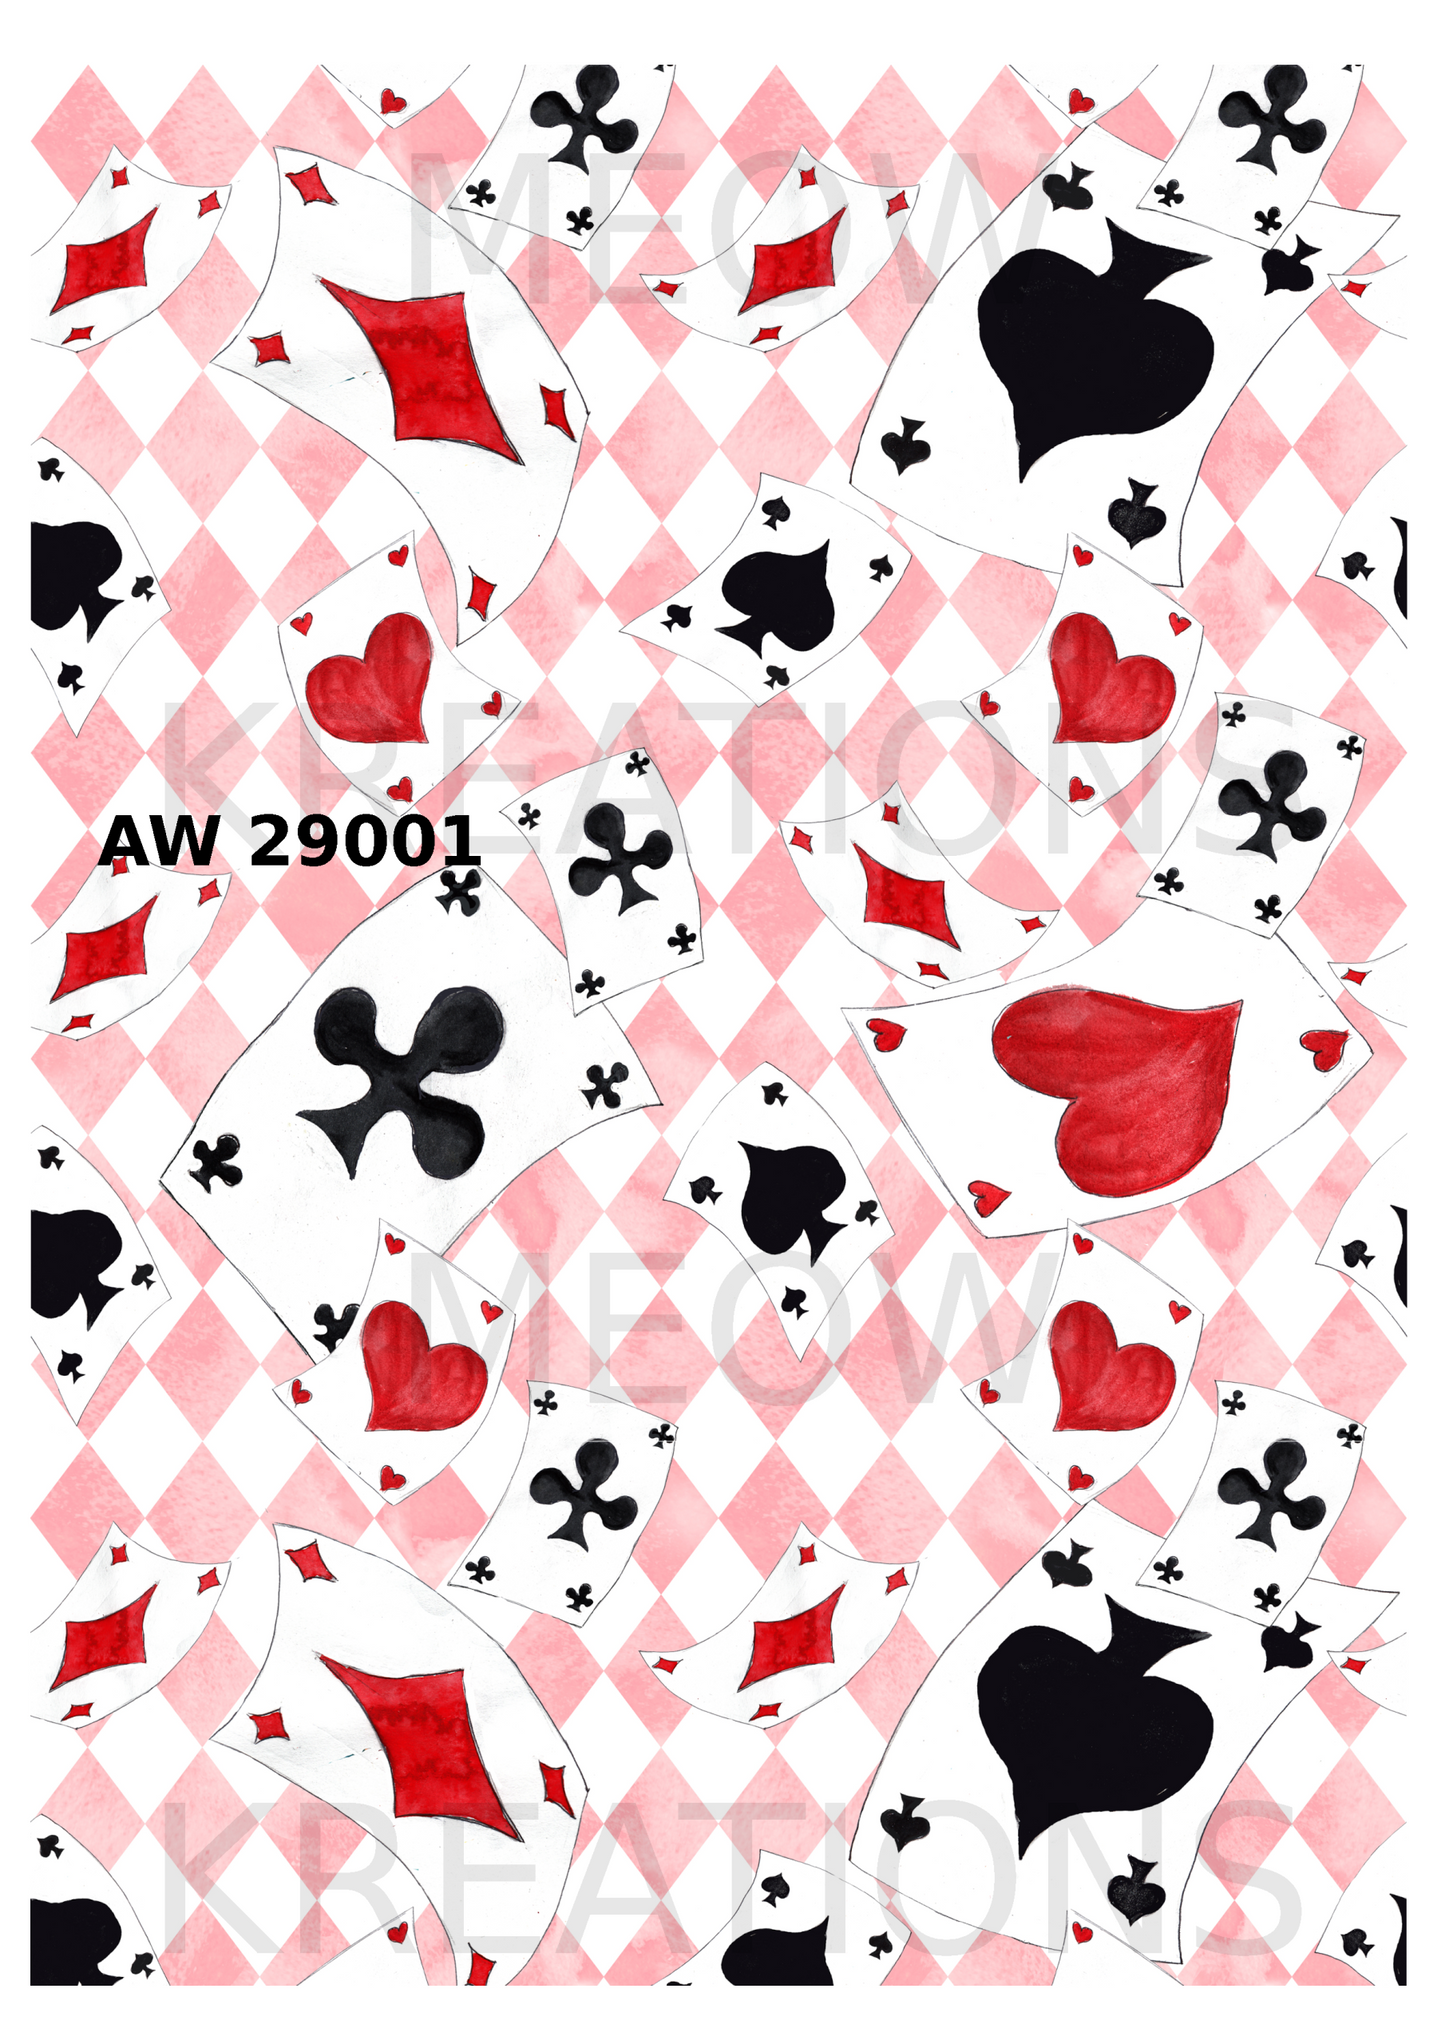 AW 29001